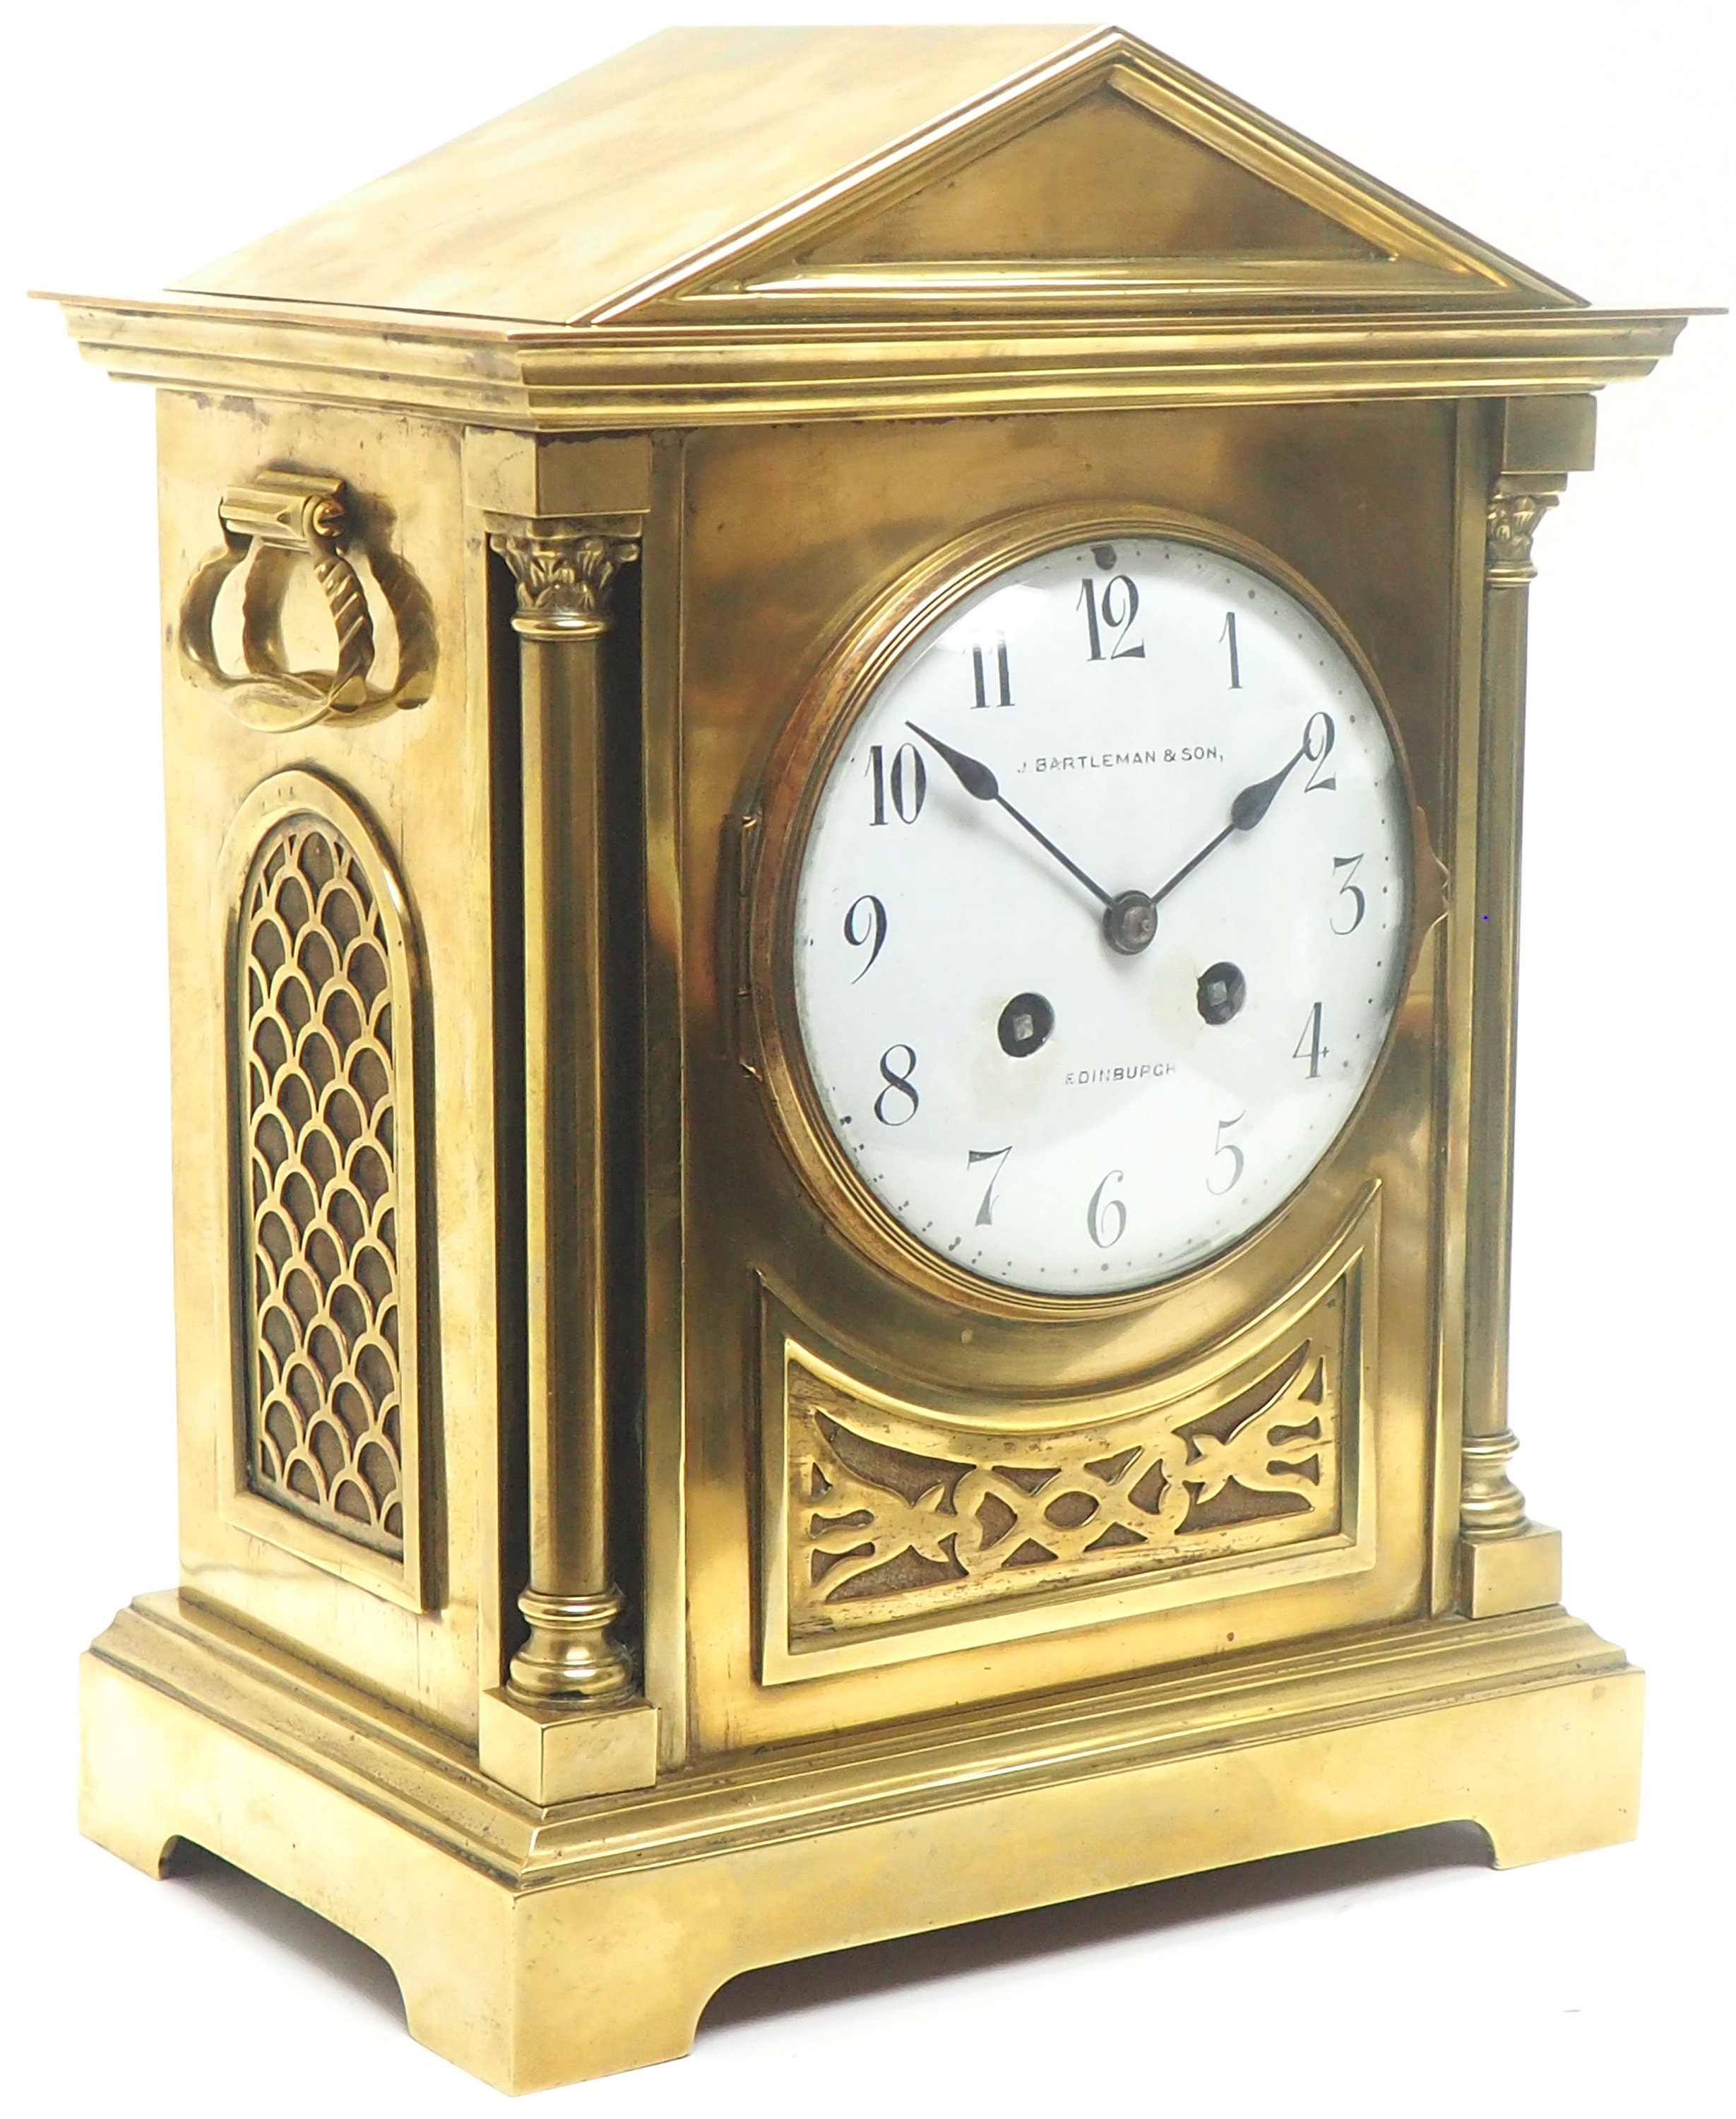 4 Metal ormolu corners #3 For mantle clock or furniture decorations 